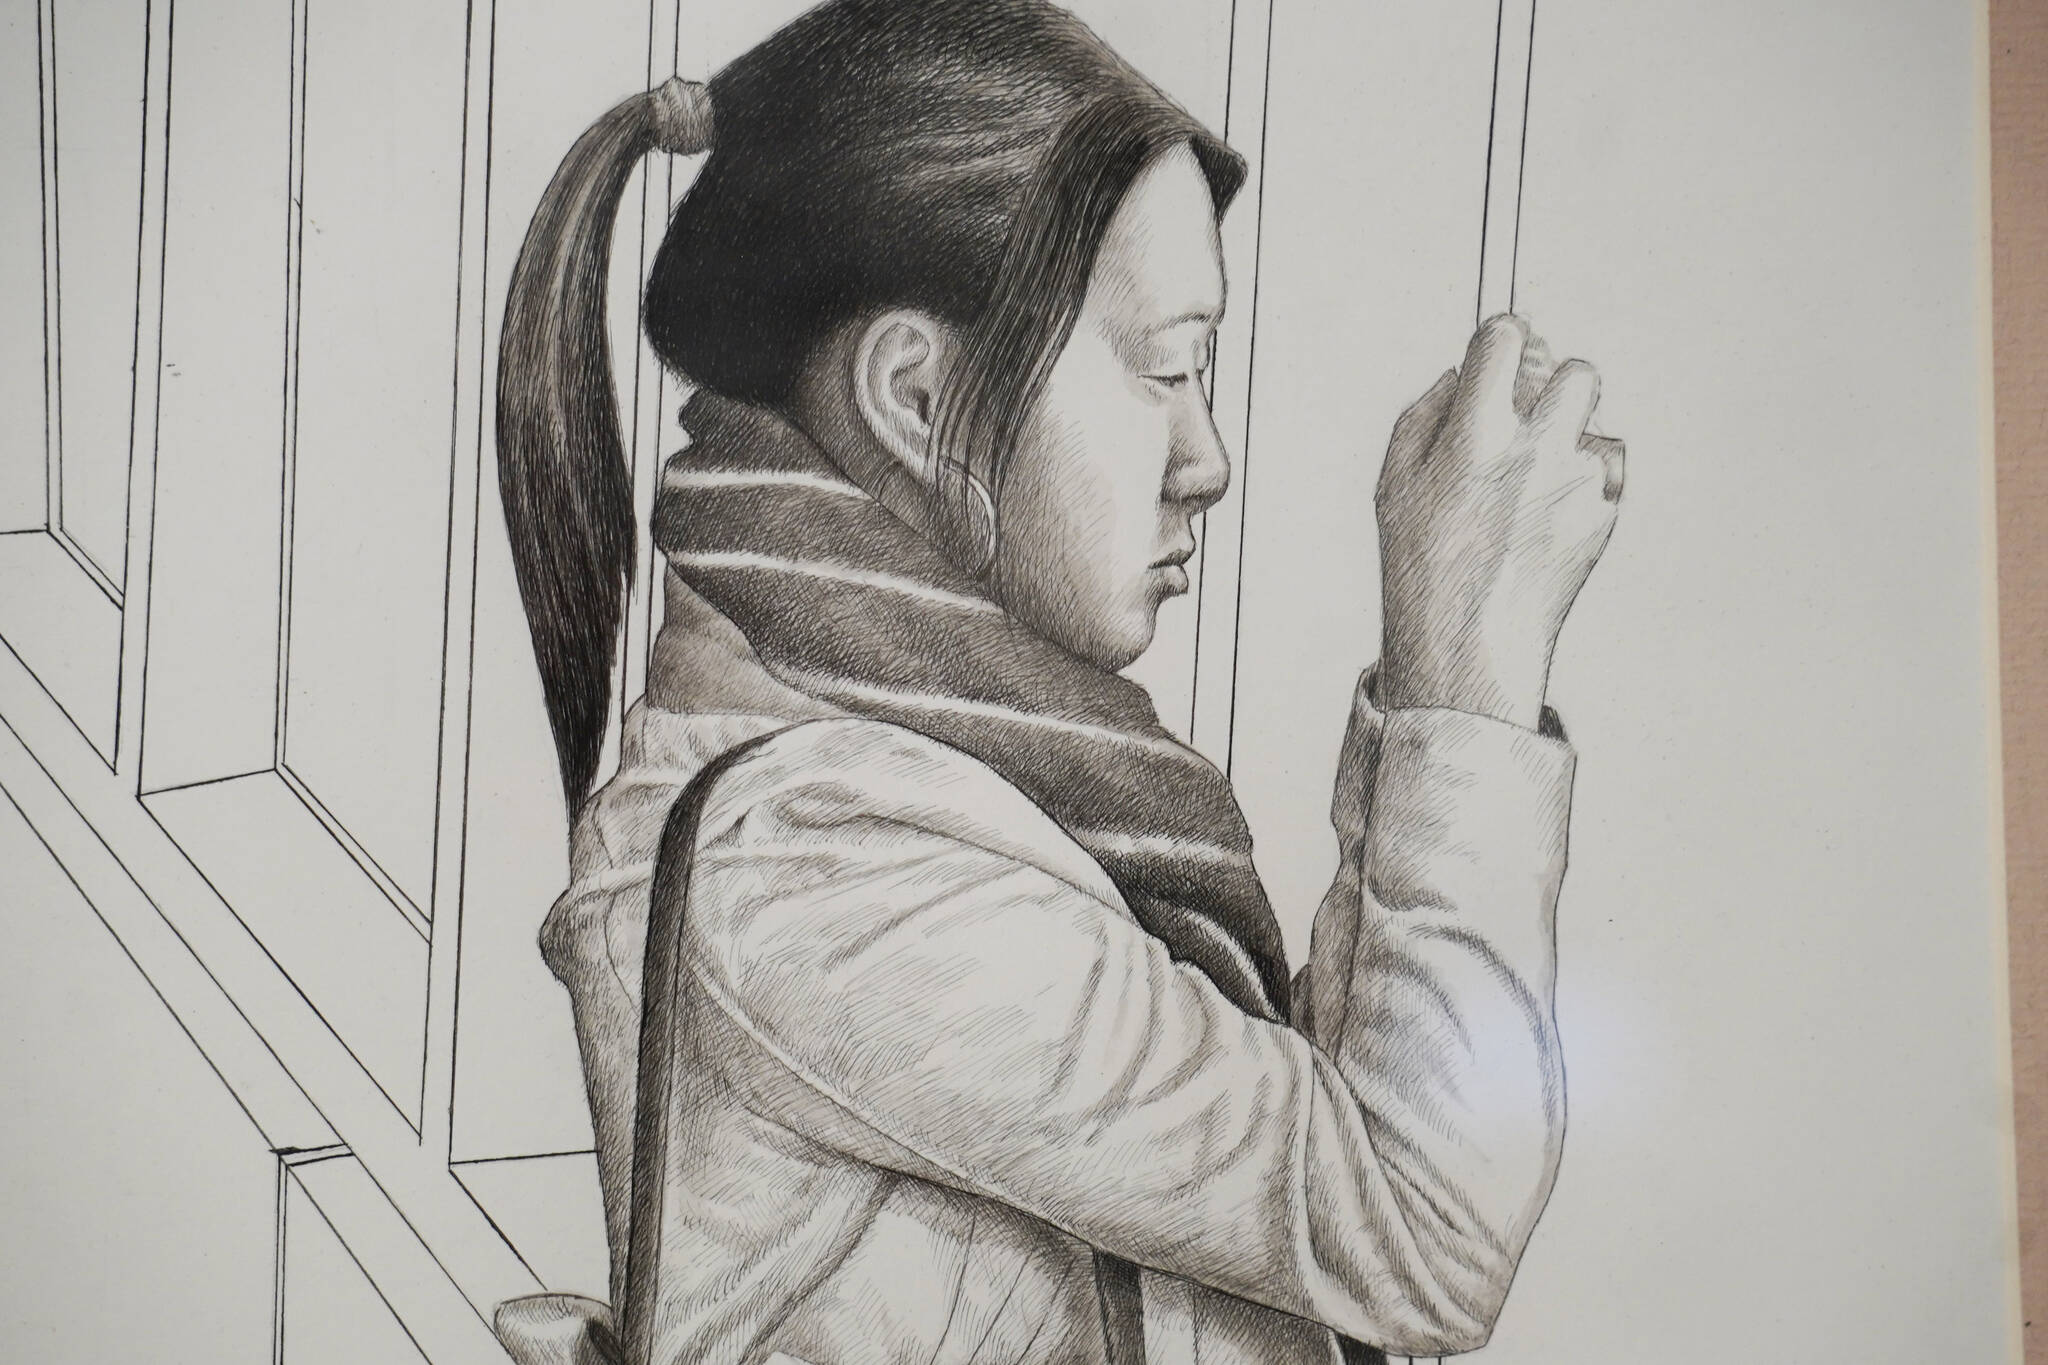 A drawing of a woman and her camera by artist Nathan Perry hangs as part of “Elaborate Expressions” at the Kenai Art Center in Kenai, Alaska on May 3, 2023. (Jake Dye/Peninsula Clarion)